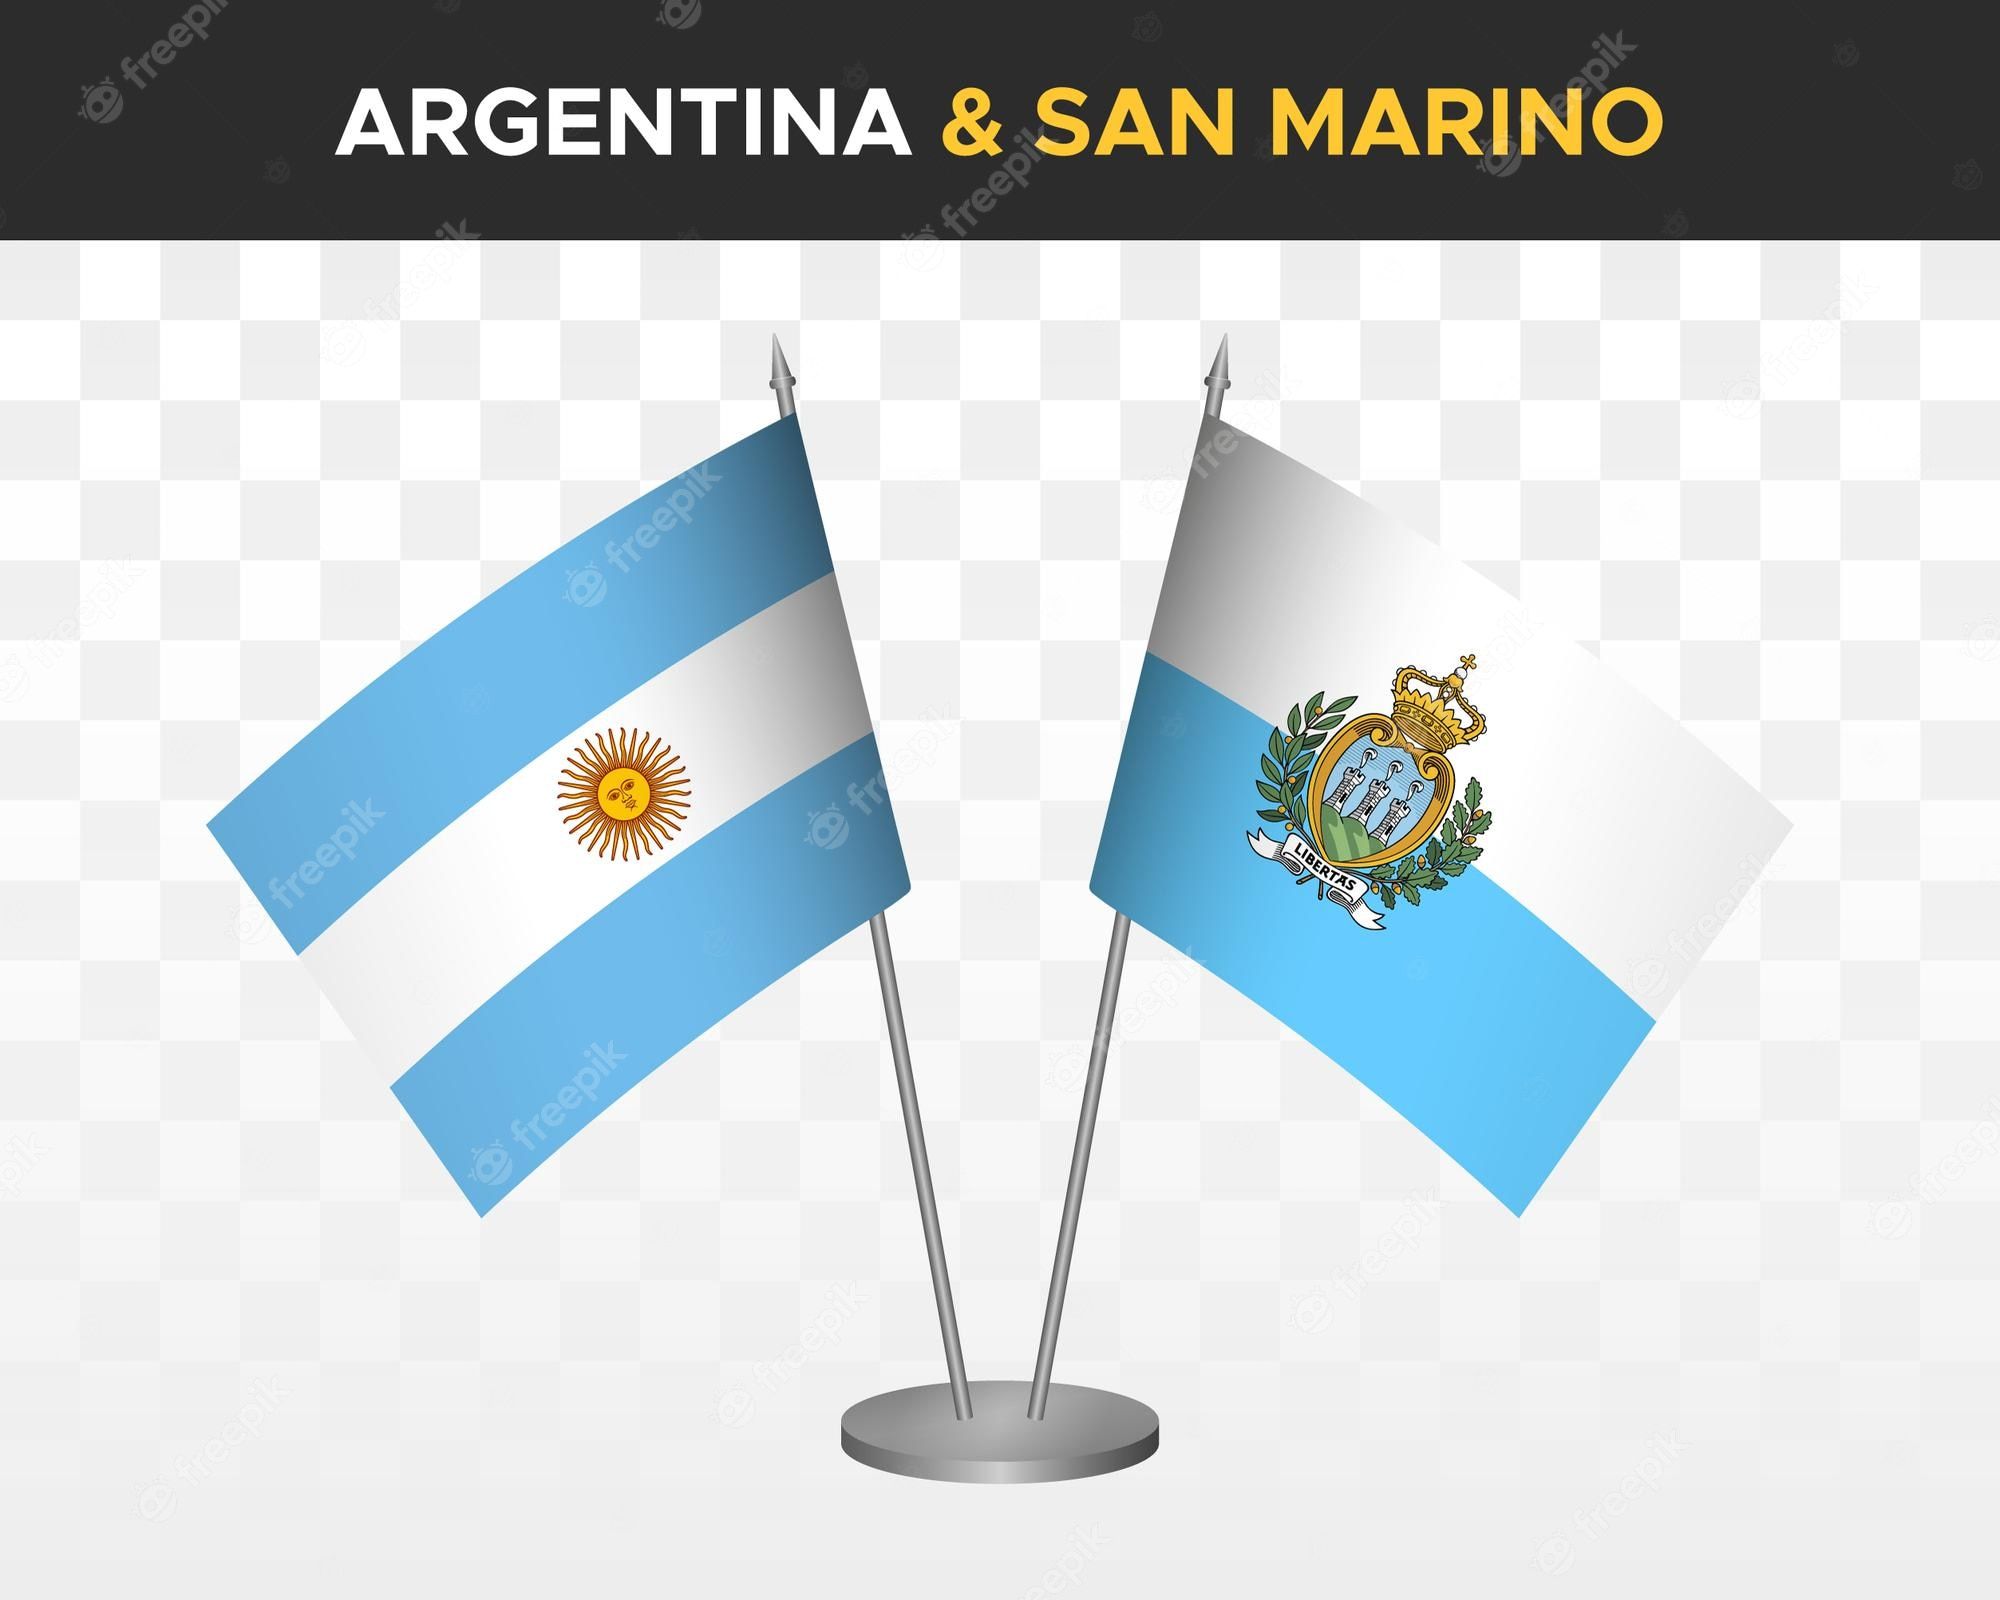 San Marino 0 (5-4) 0 Argentina